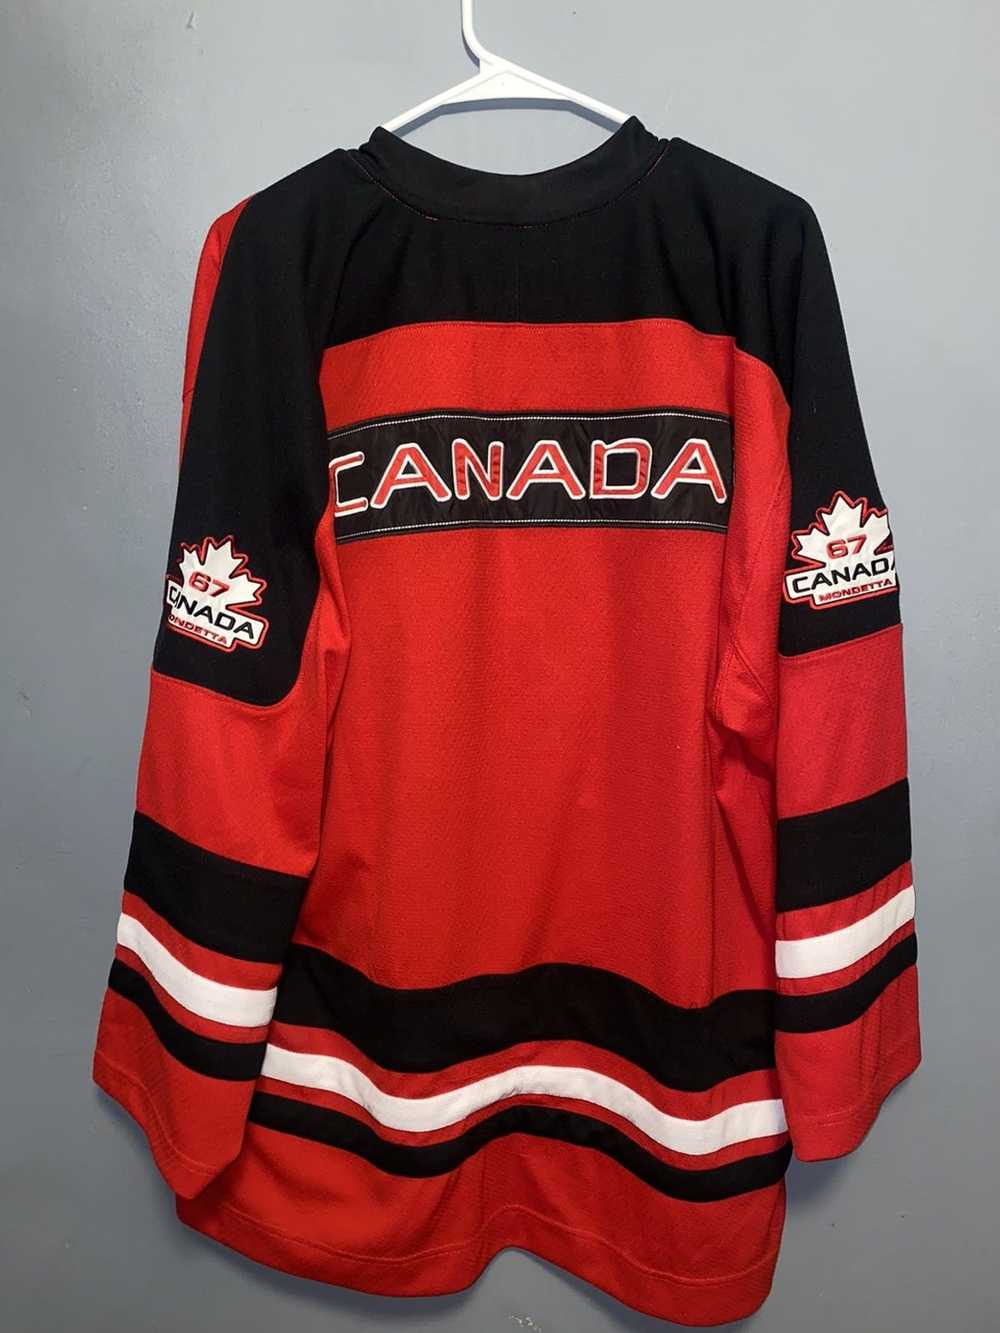 Torhs America Hockey Jersey Team Hystyk Bald Eagle Made in Canada